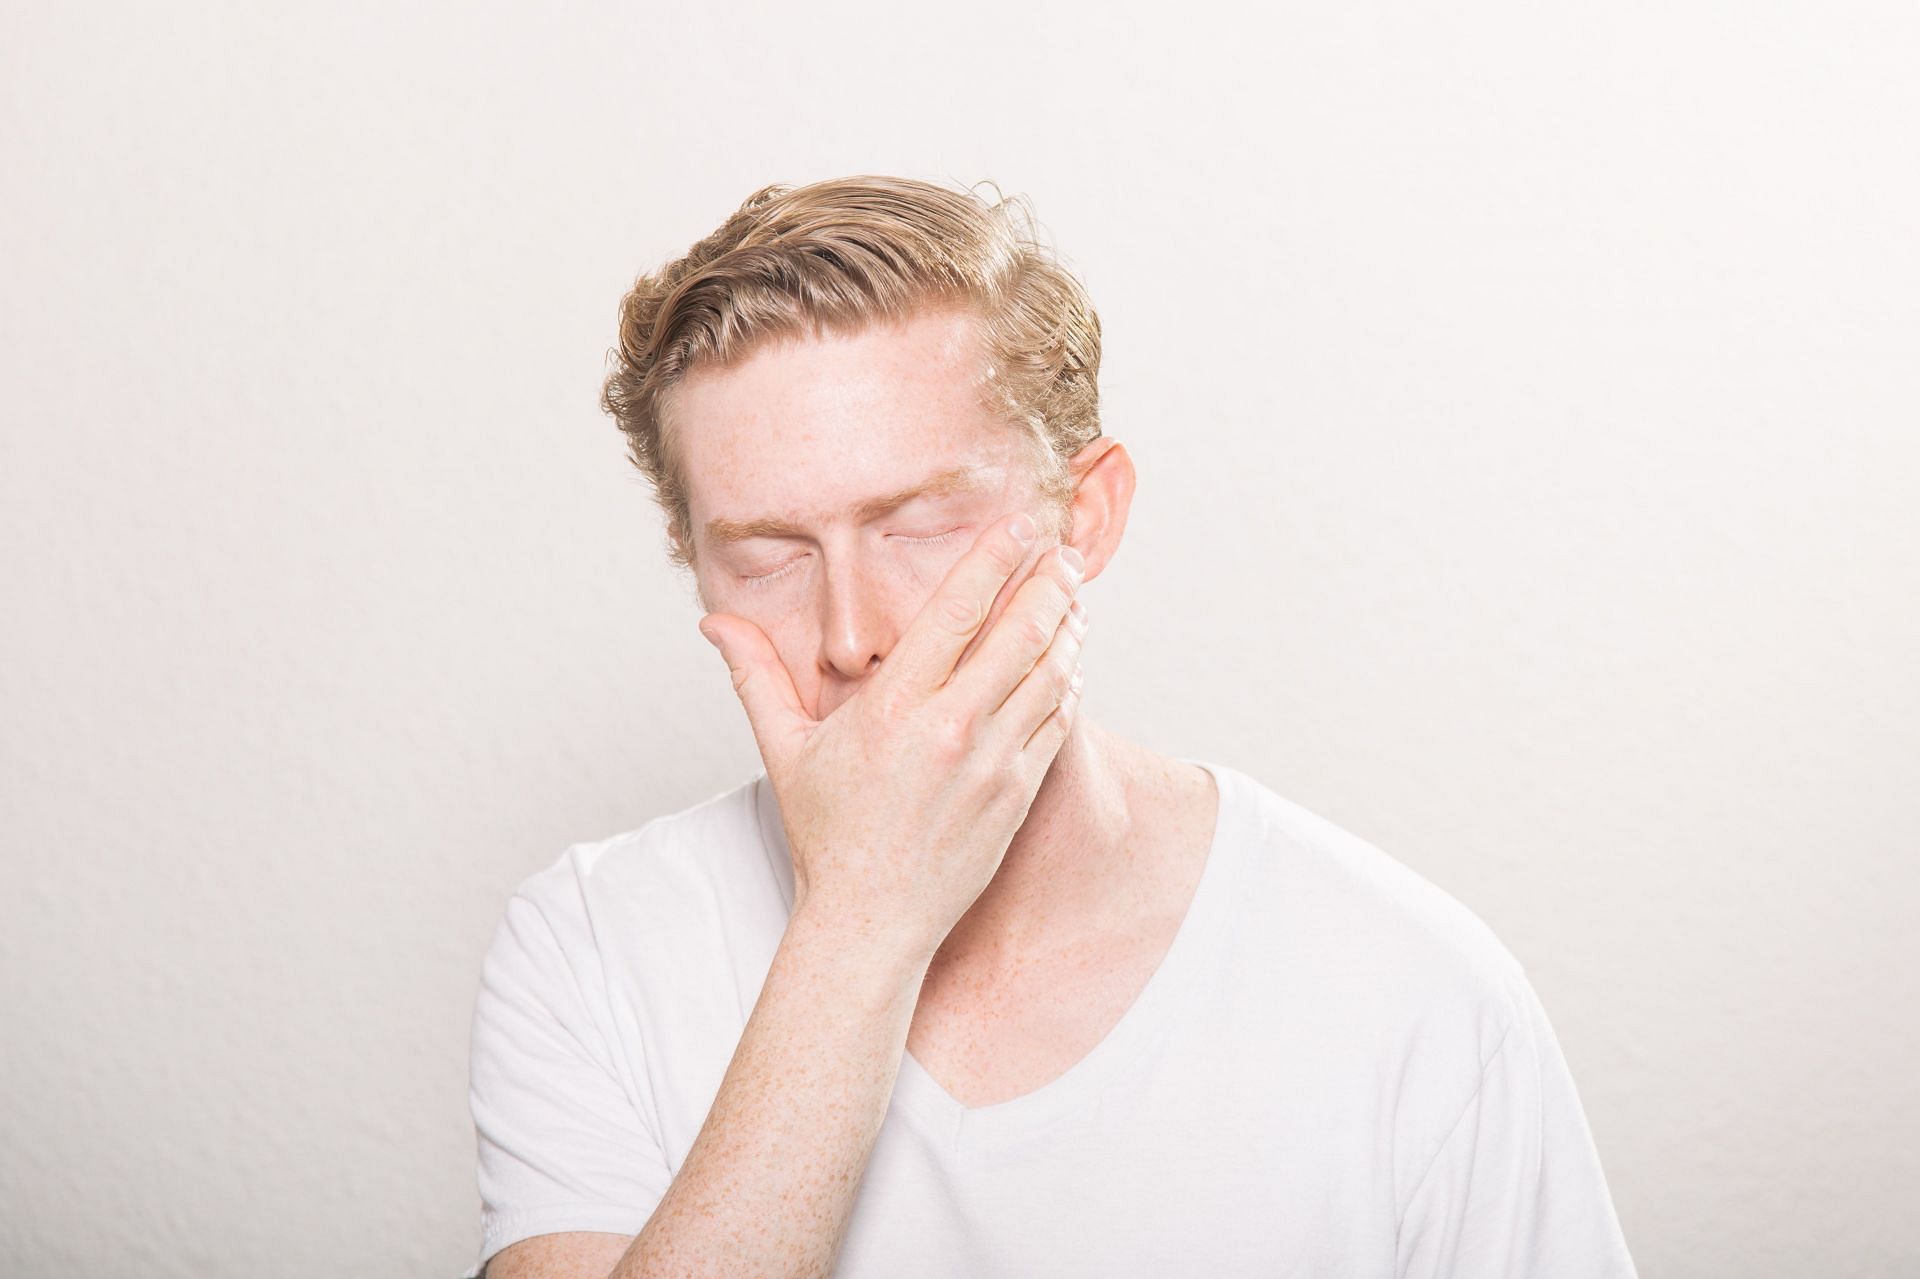 Nausea and headaches are the most common symptoms. (Image via Unsplash/Kyle Glenn)